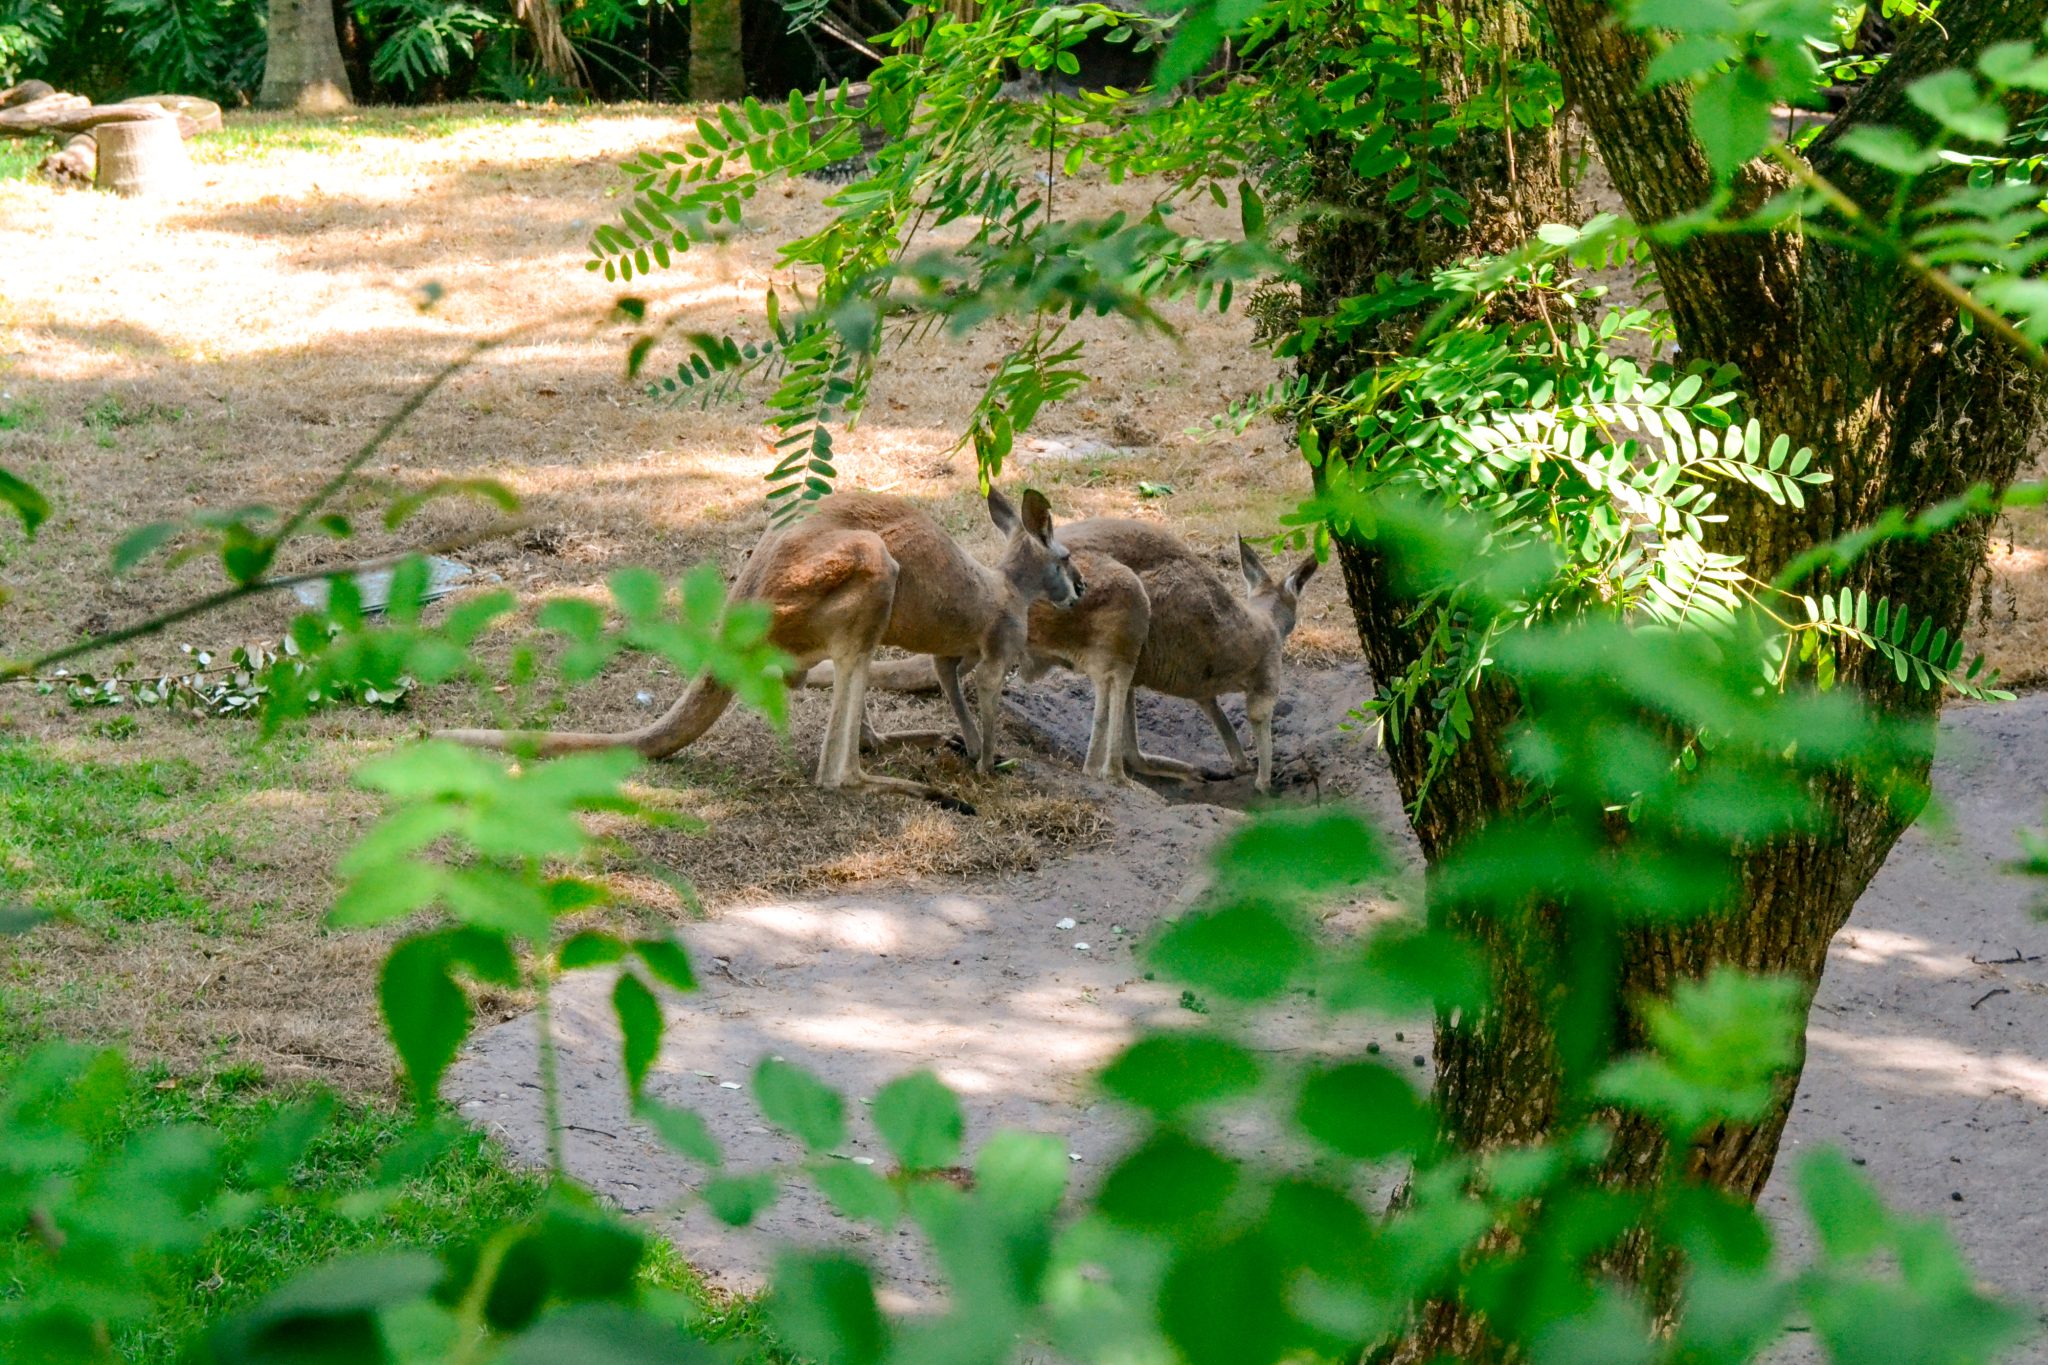 Kangaroos resting in the shade